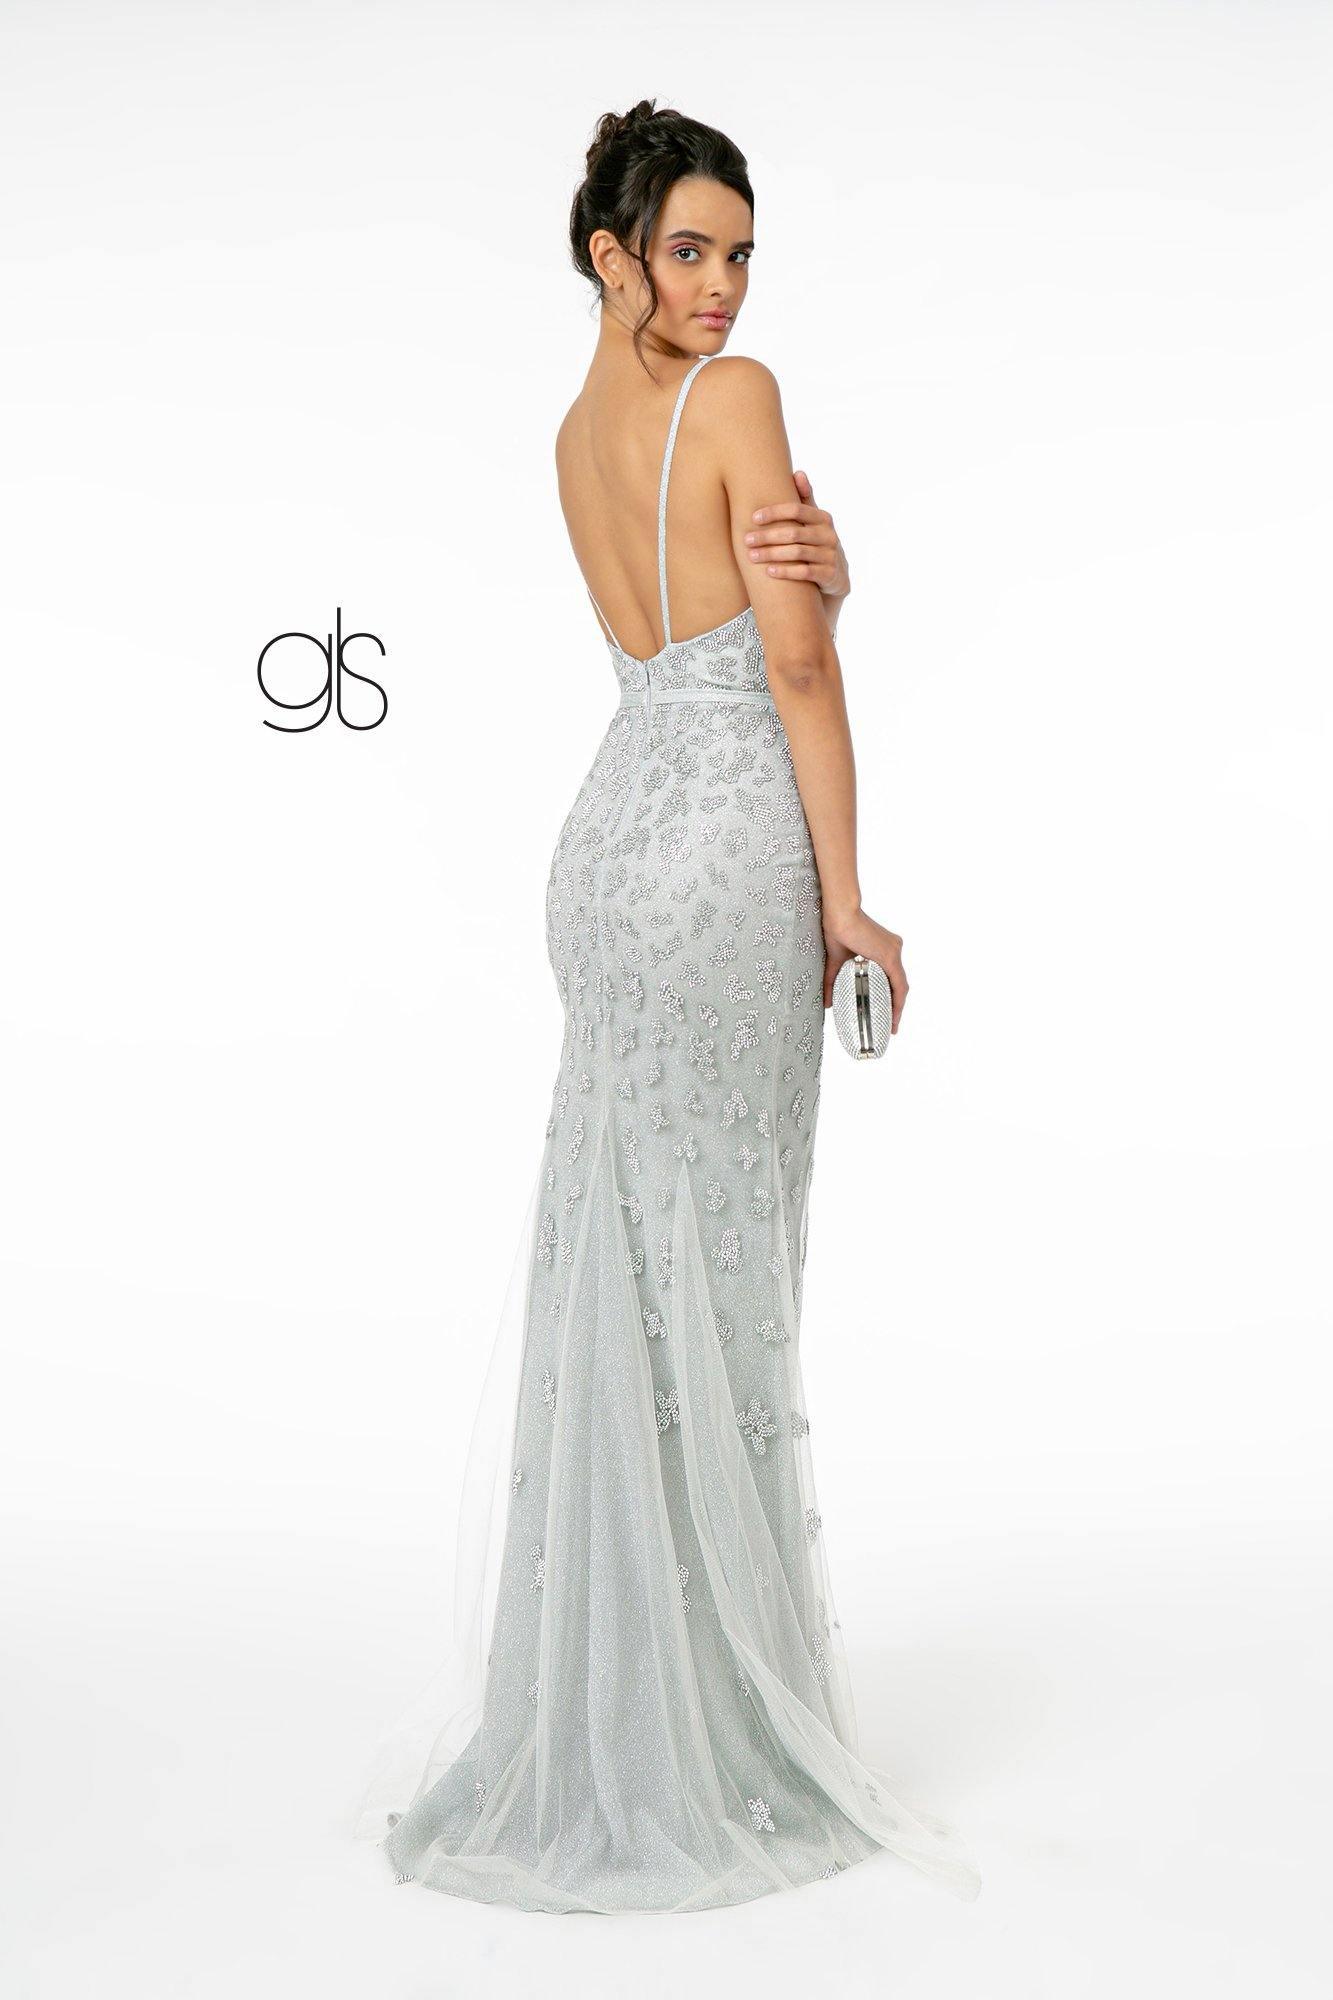 Glitter Mesh Mermaid Long Prom Dress Sale - The Dress Outlet